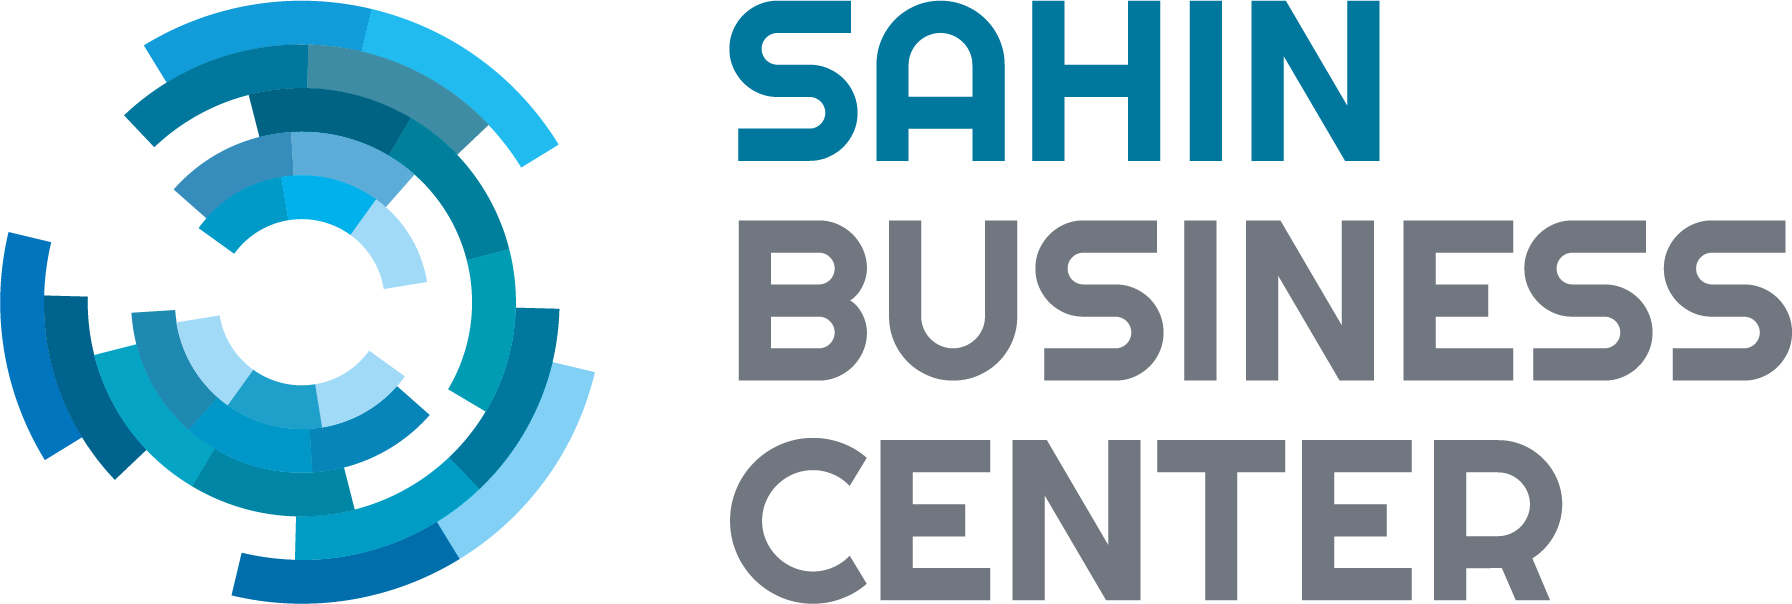 Sahin Business Center